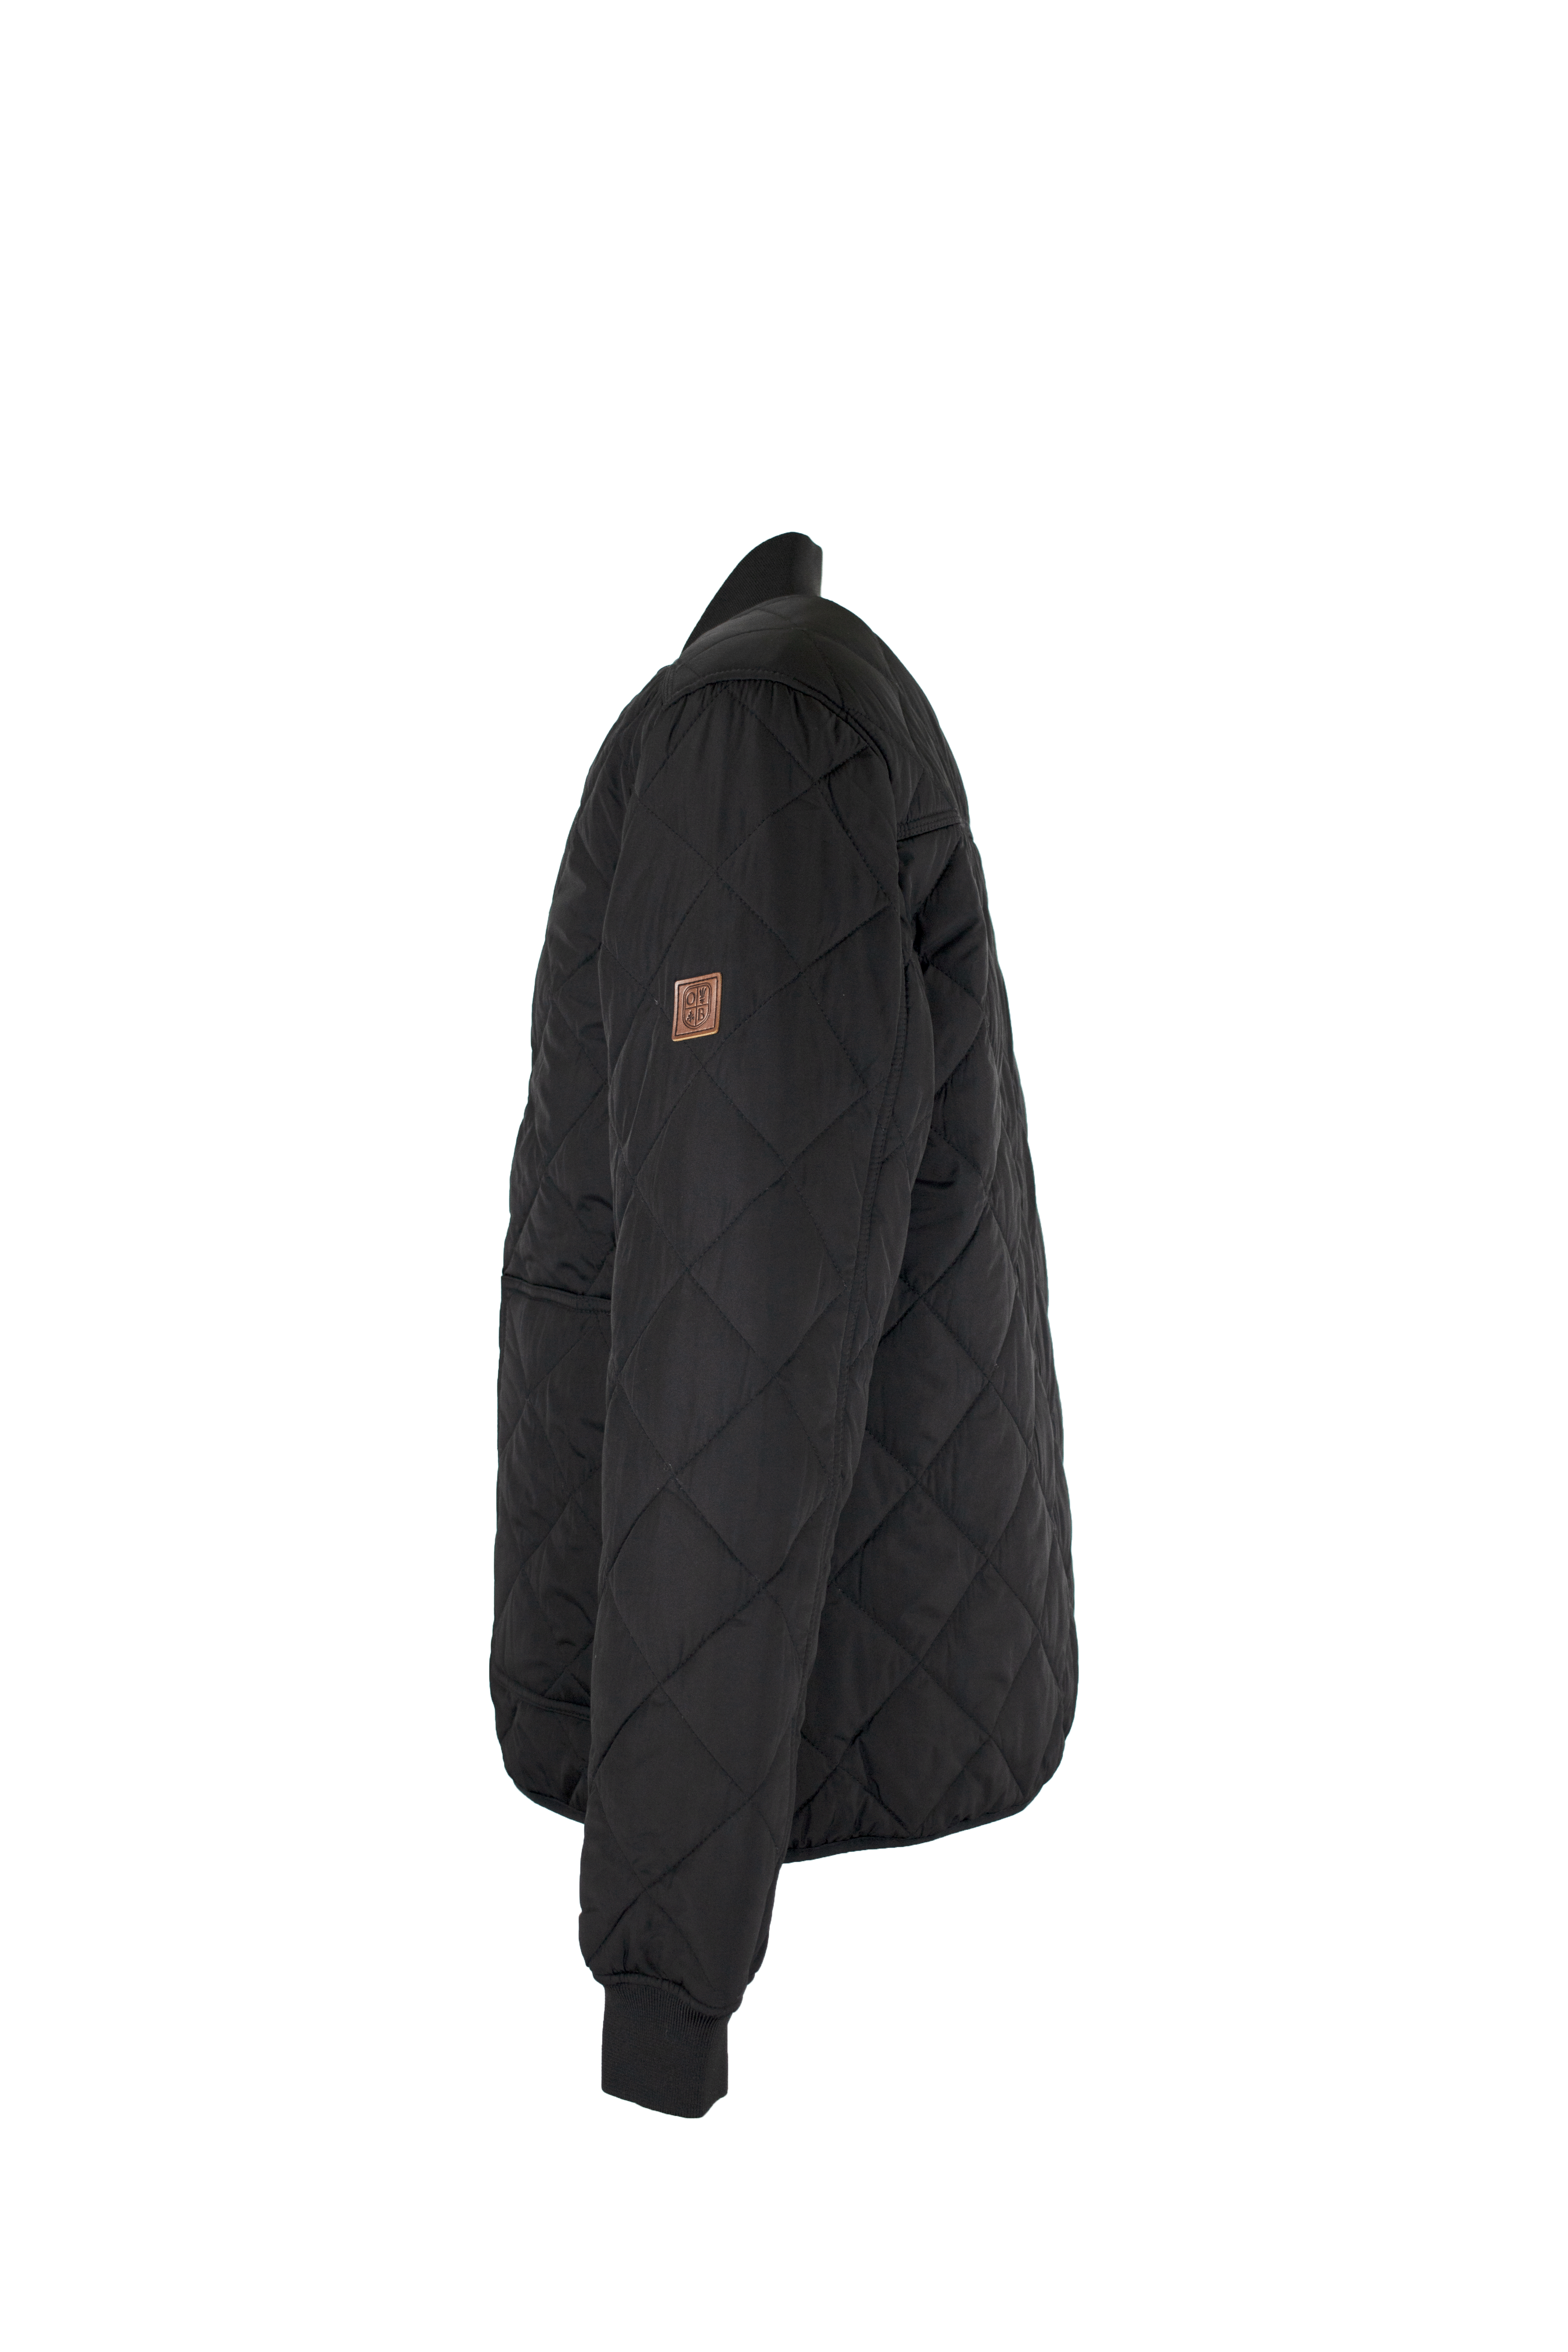 MJ005 - Men's Keswick Quilted Jacket - BLACK